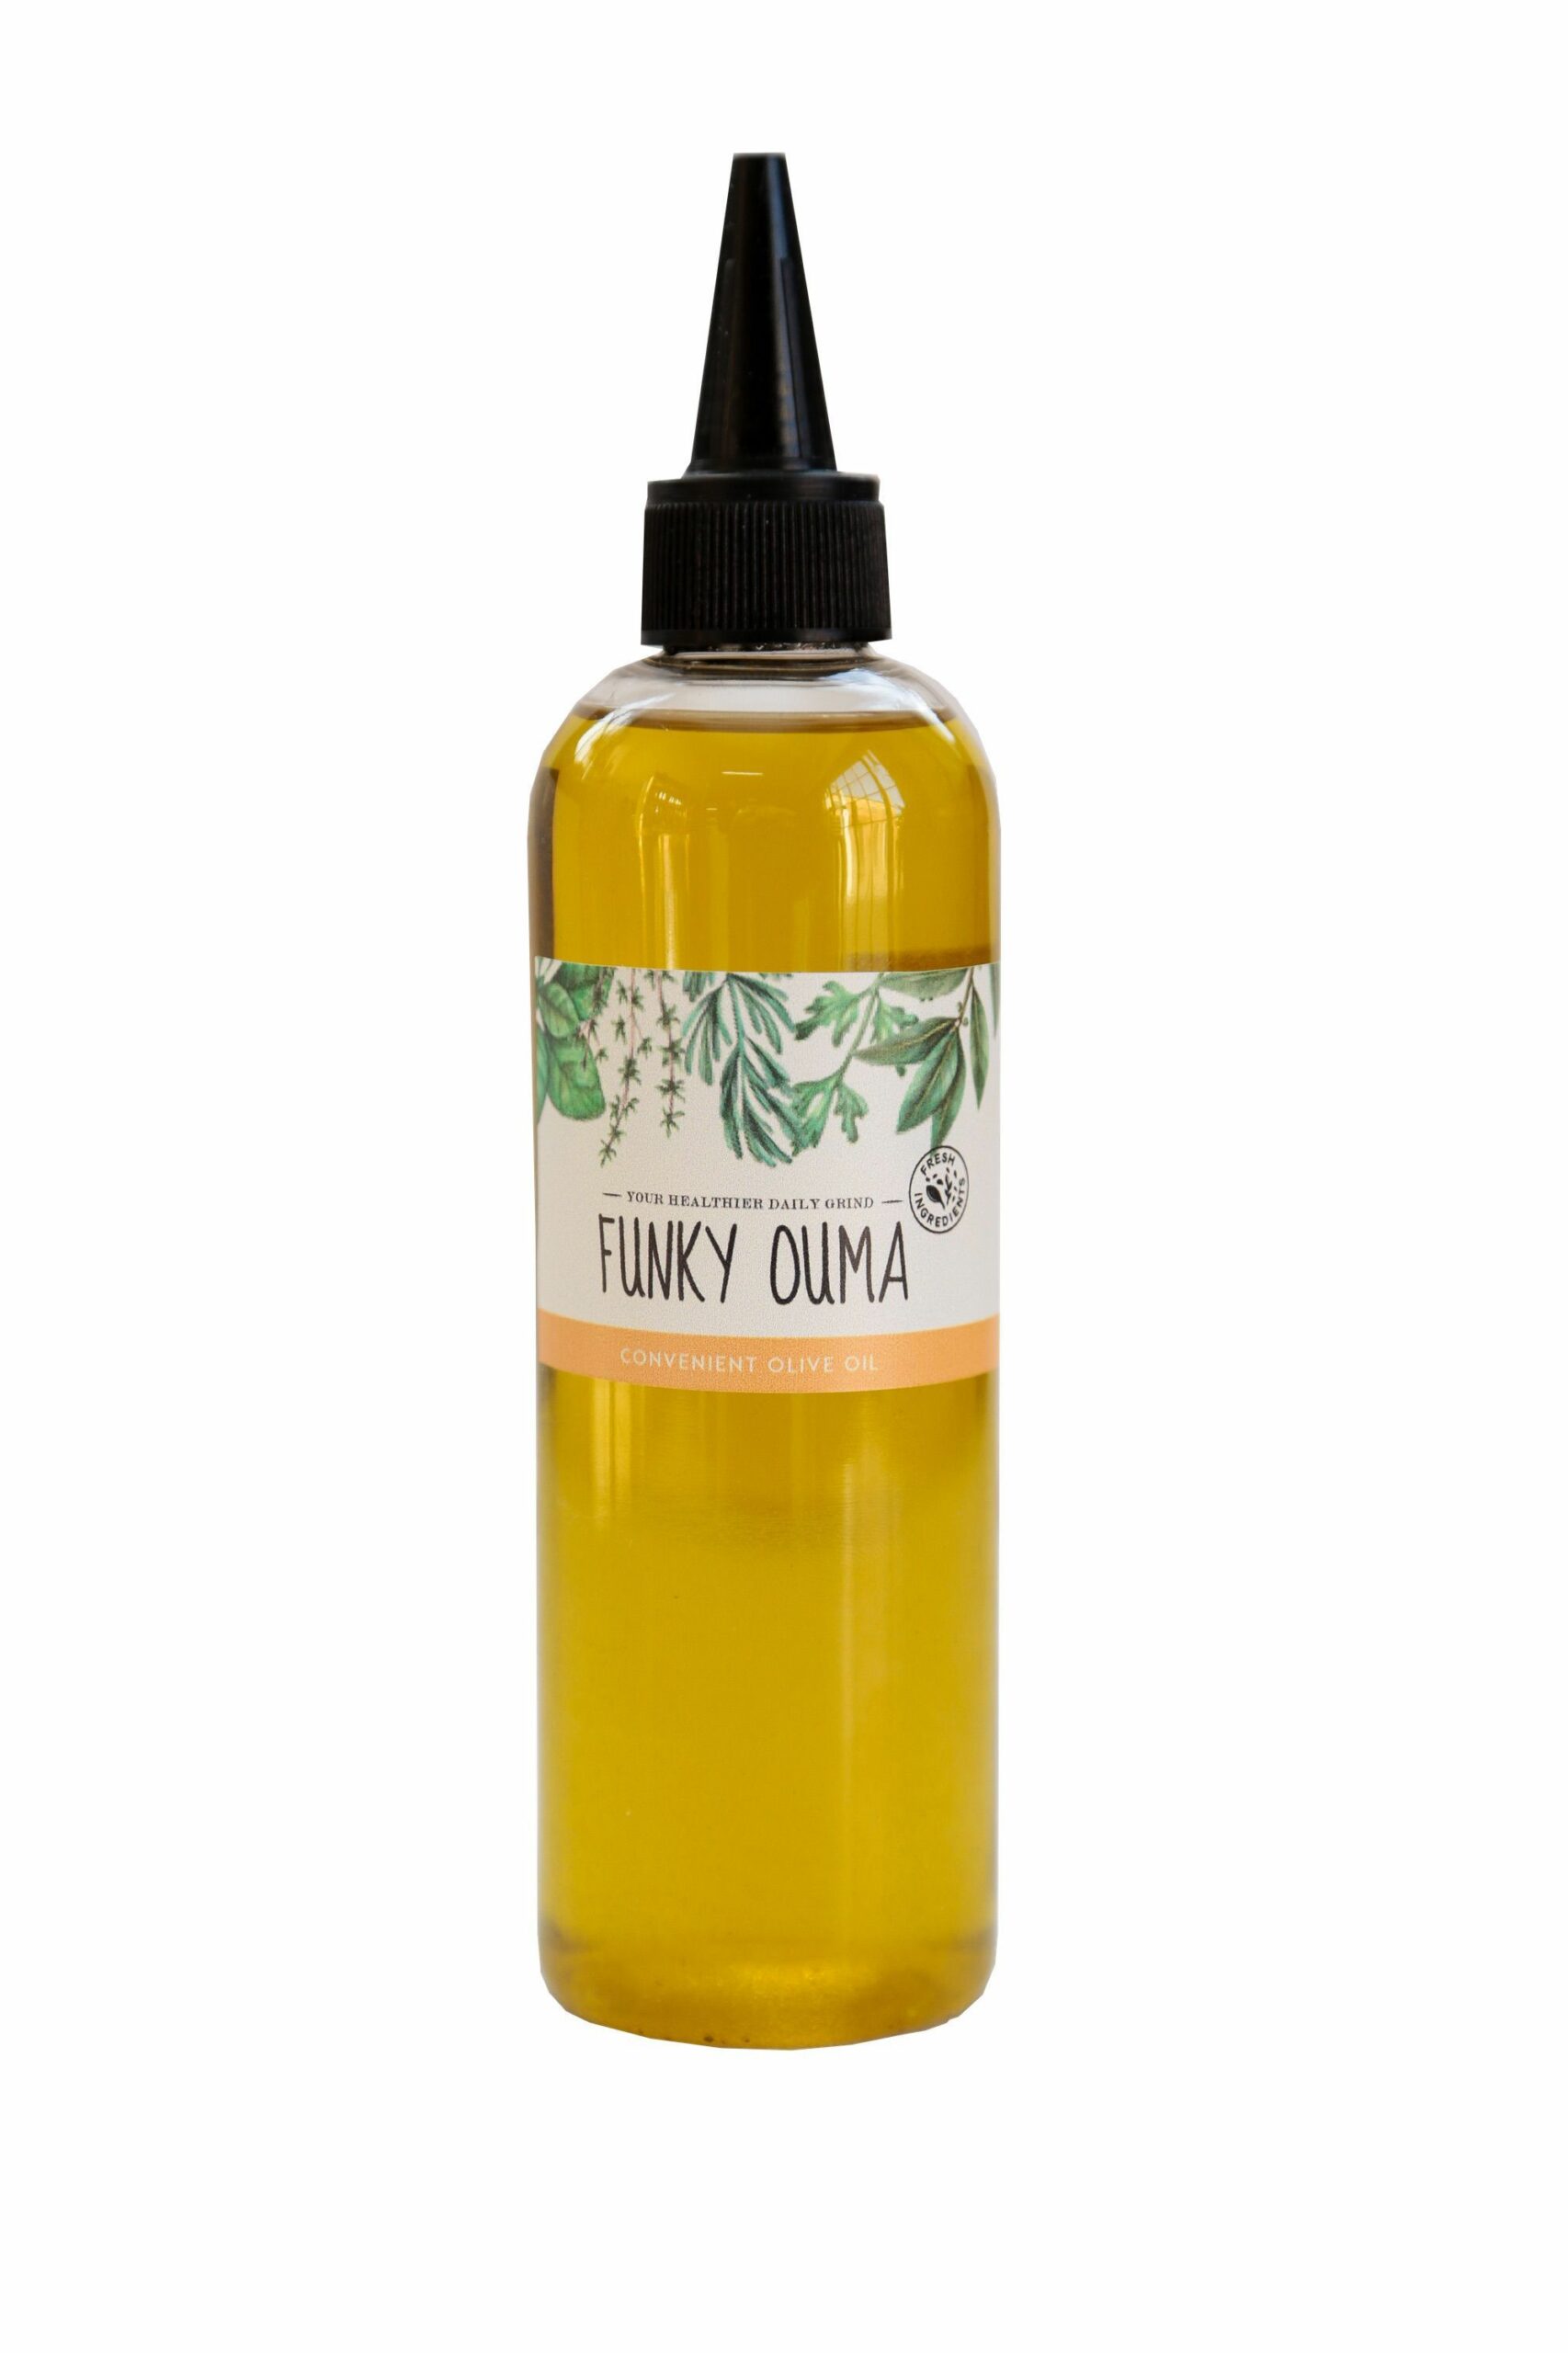 Funky Ouma Olive Oil 250ml Convenient